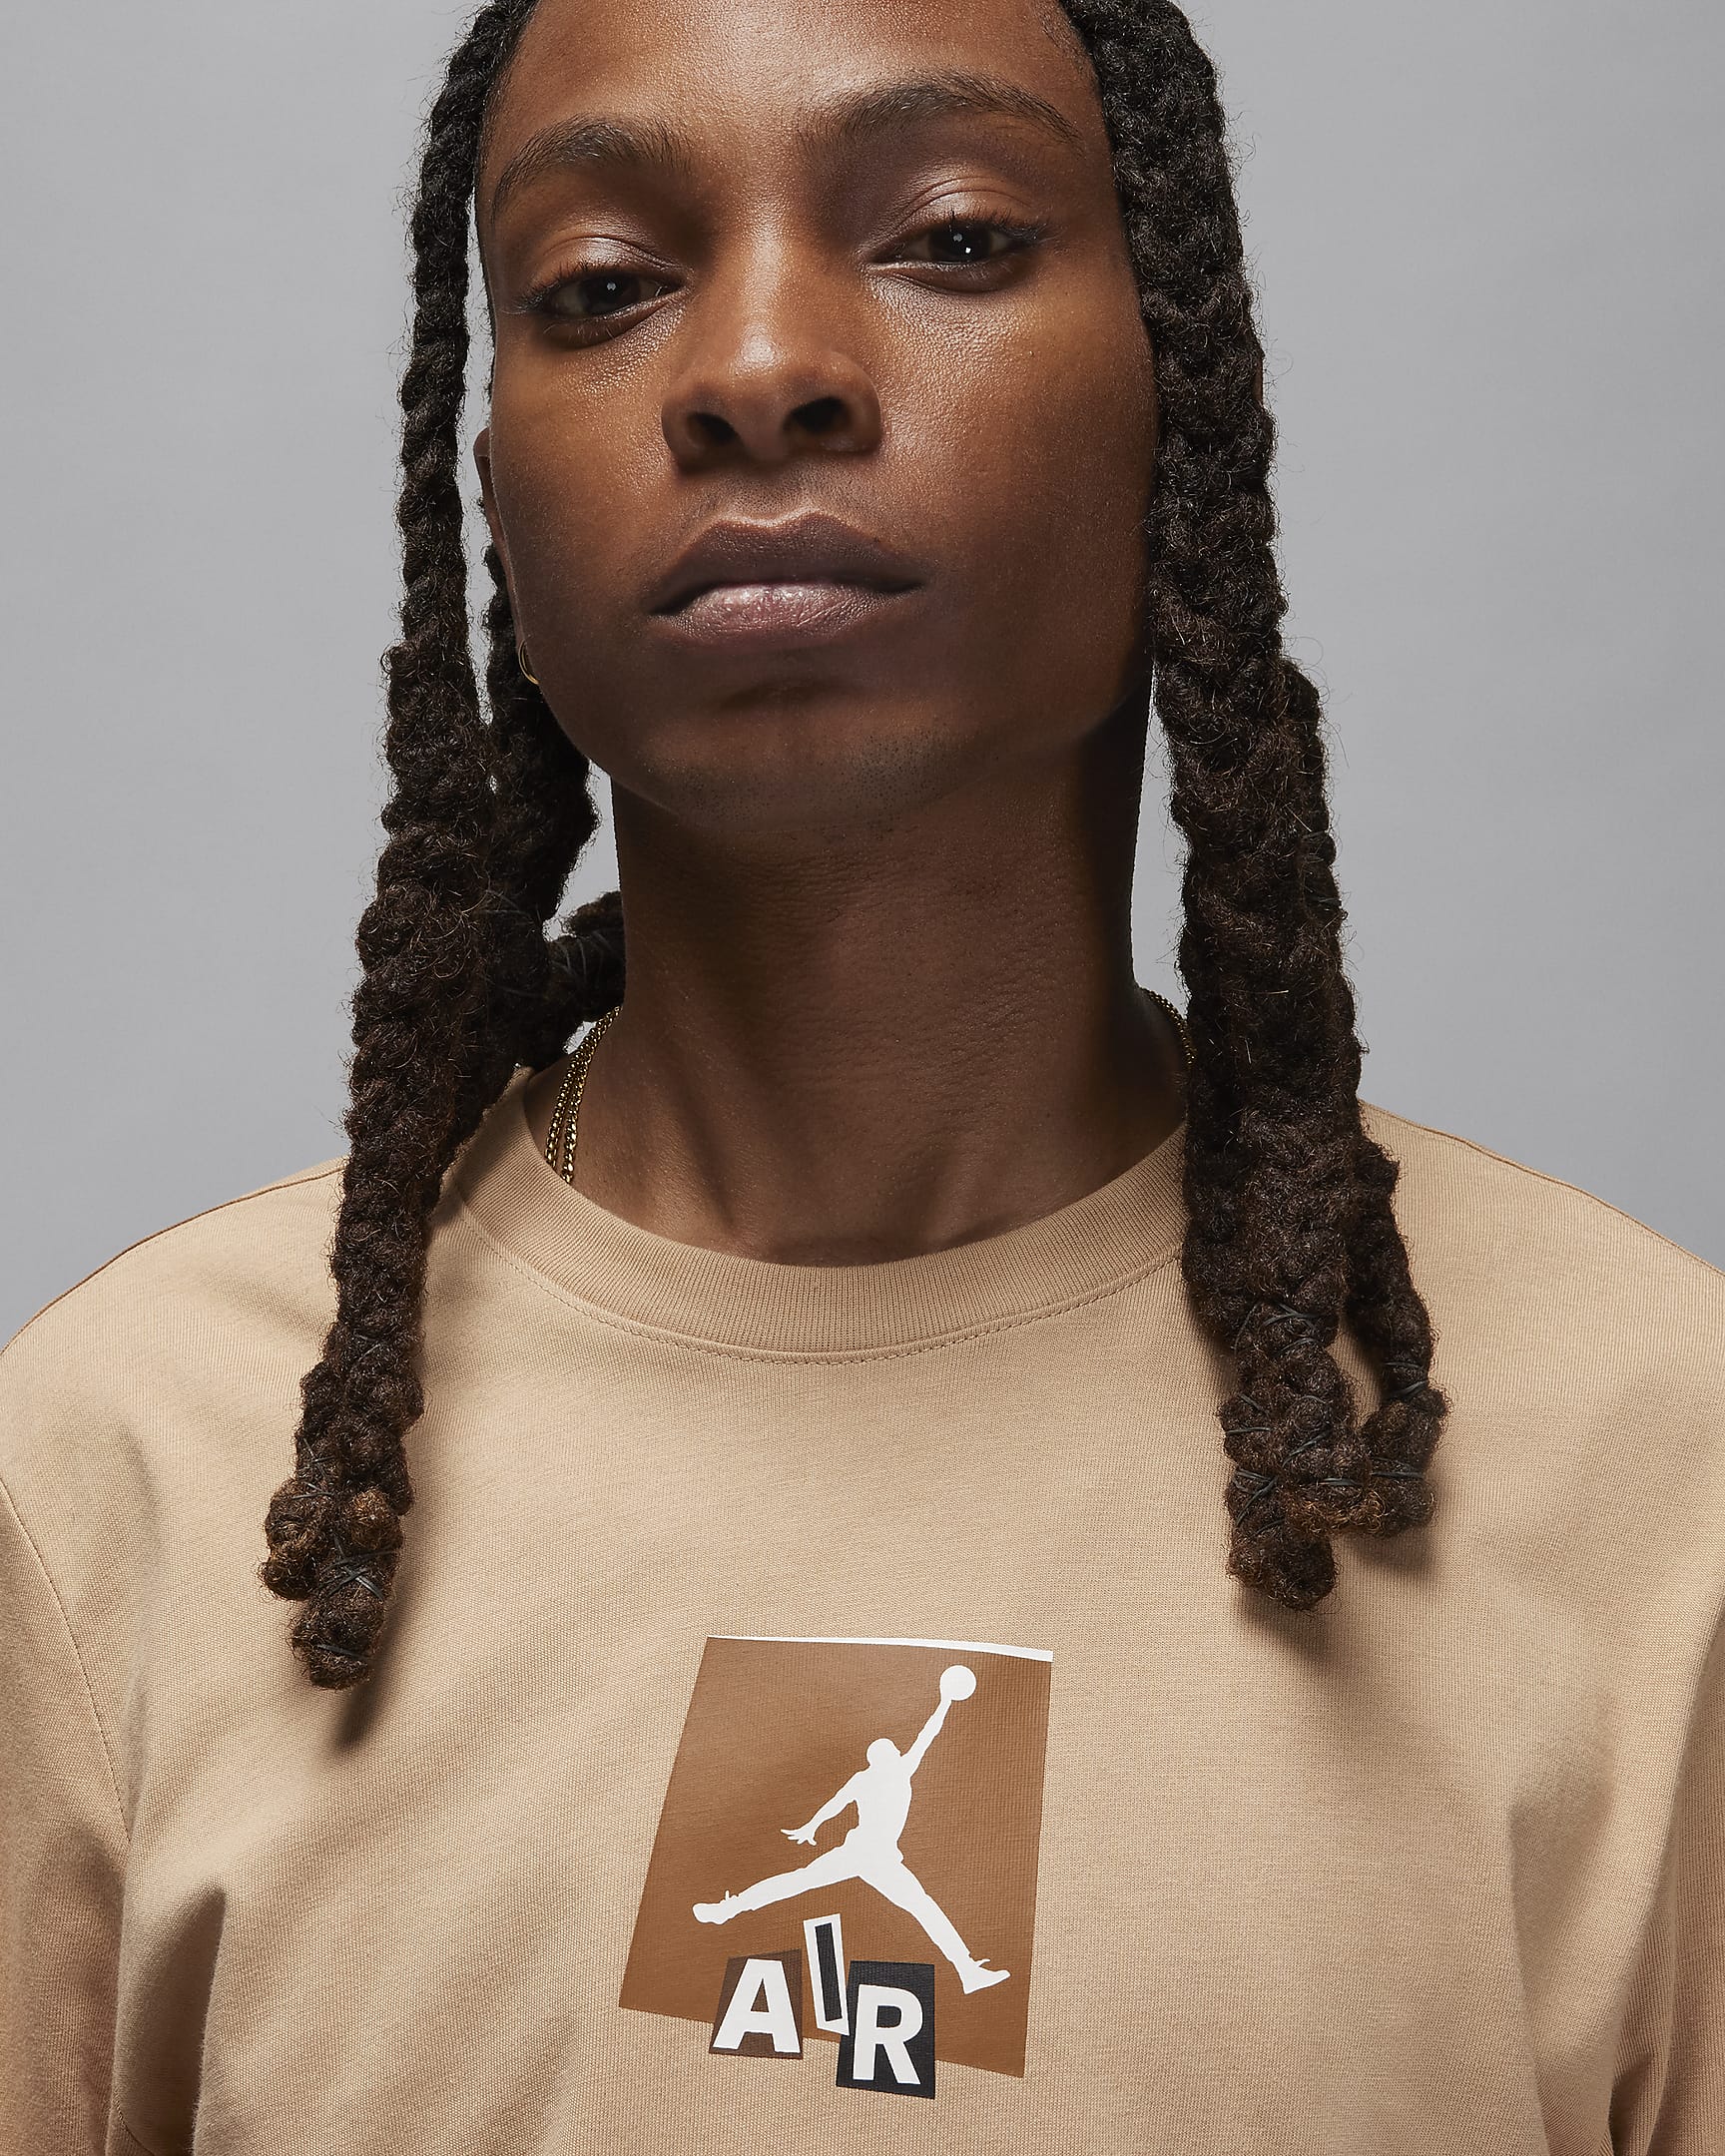 Jordan Brand Men's Graphic Long-Sleeve T-Shirt - Hemp/Sail